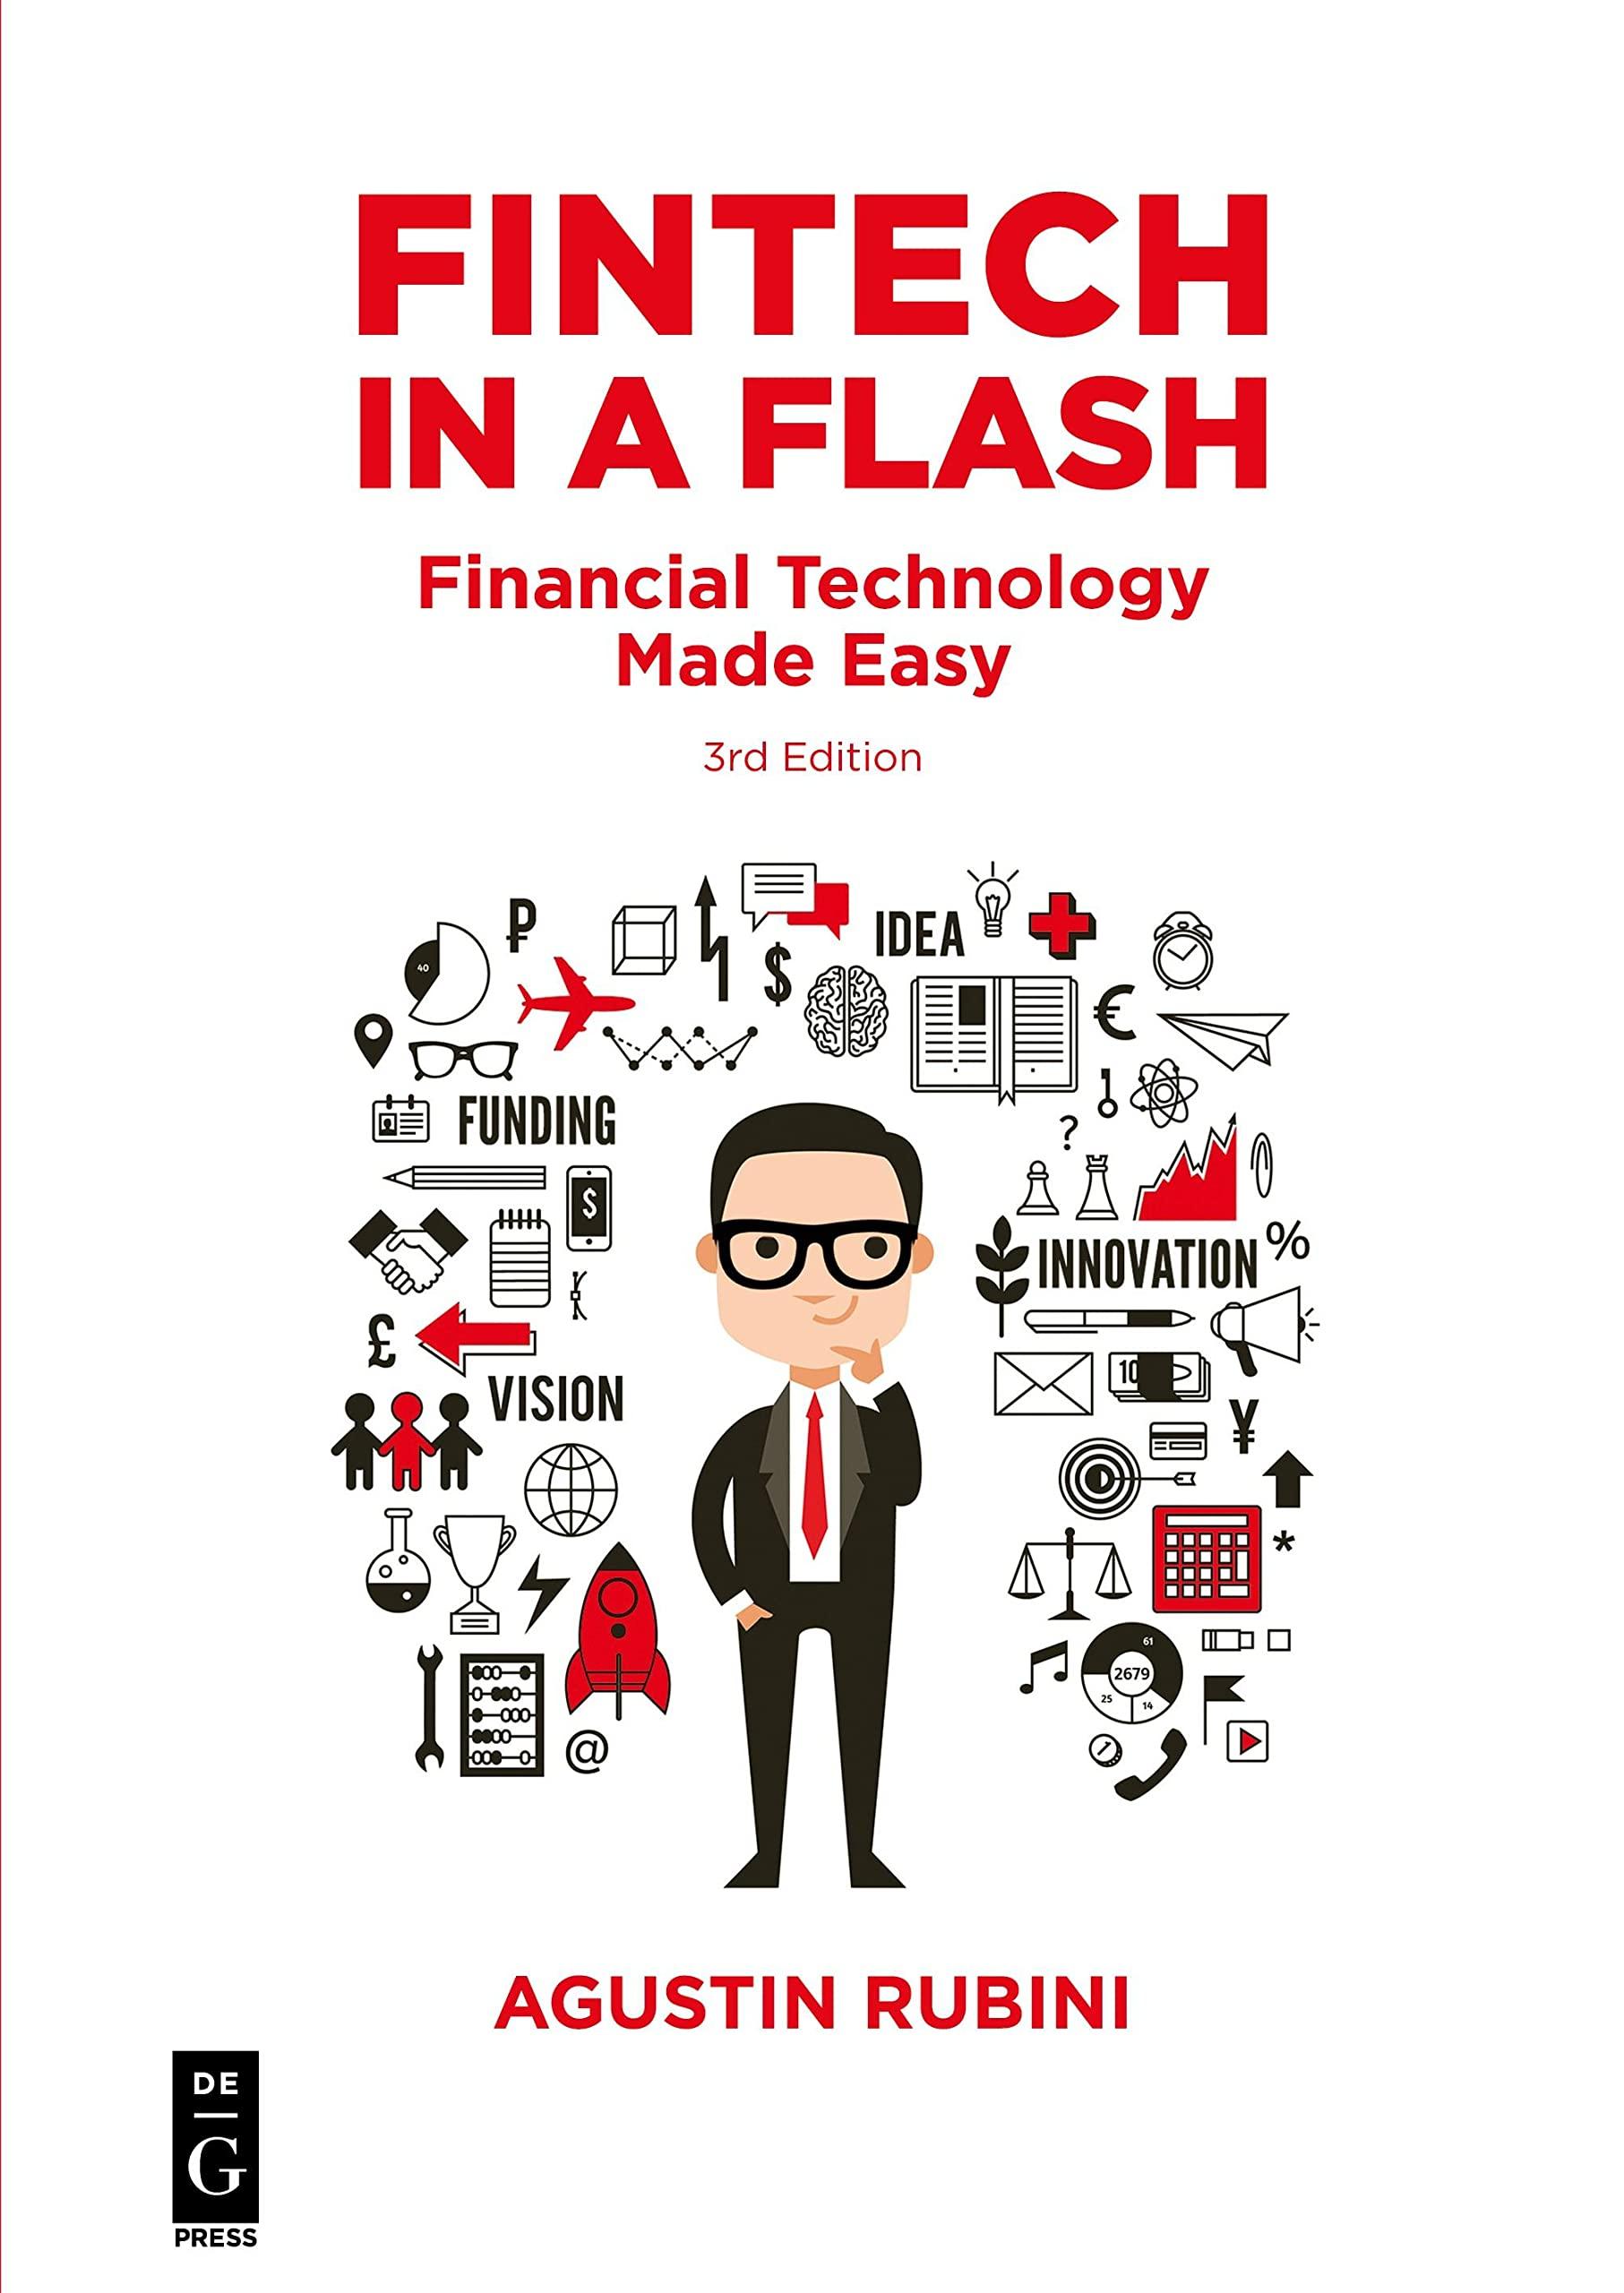 fintech in a flash financial technology made easy 3rd edition agustin rubini 1547417161, 978-1547417162